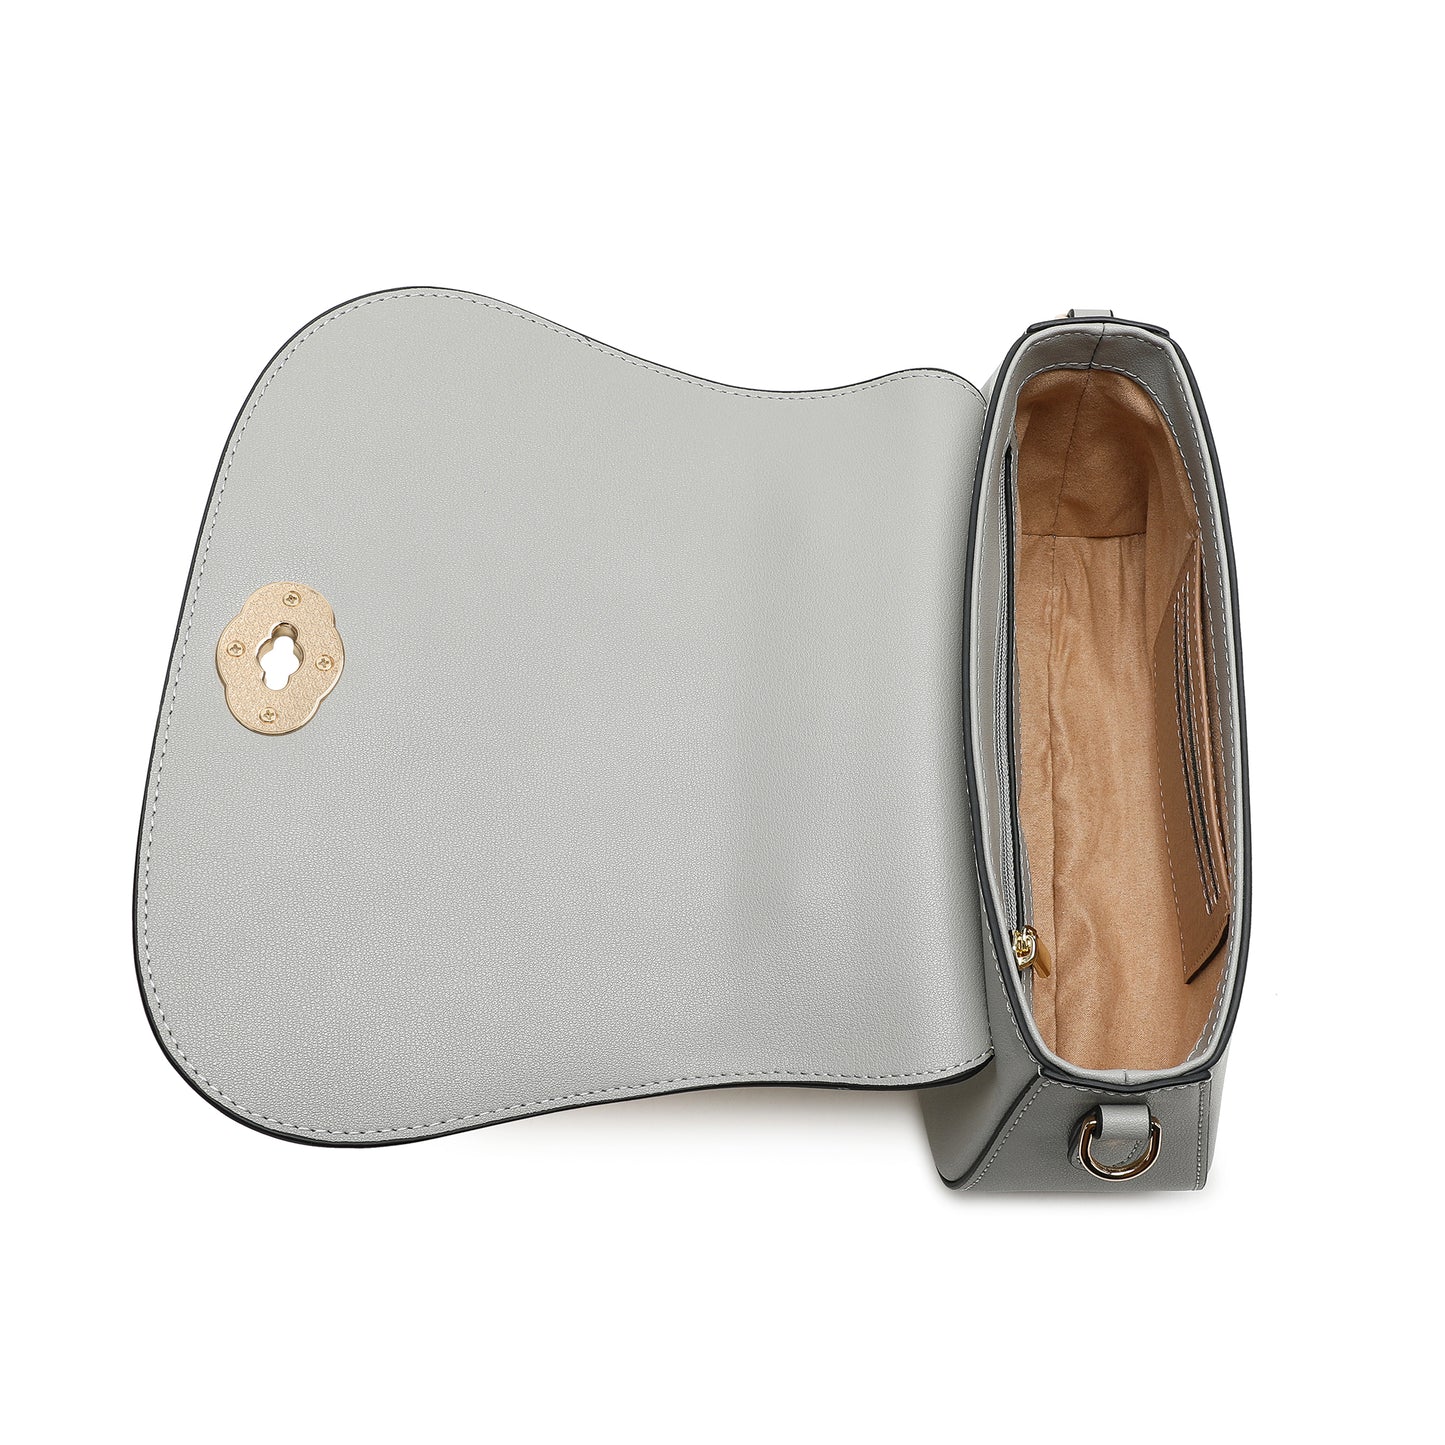 Tiffany & Fred Smooth Sewn Satchel/Shoulder Bag # 230708